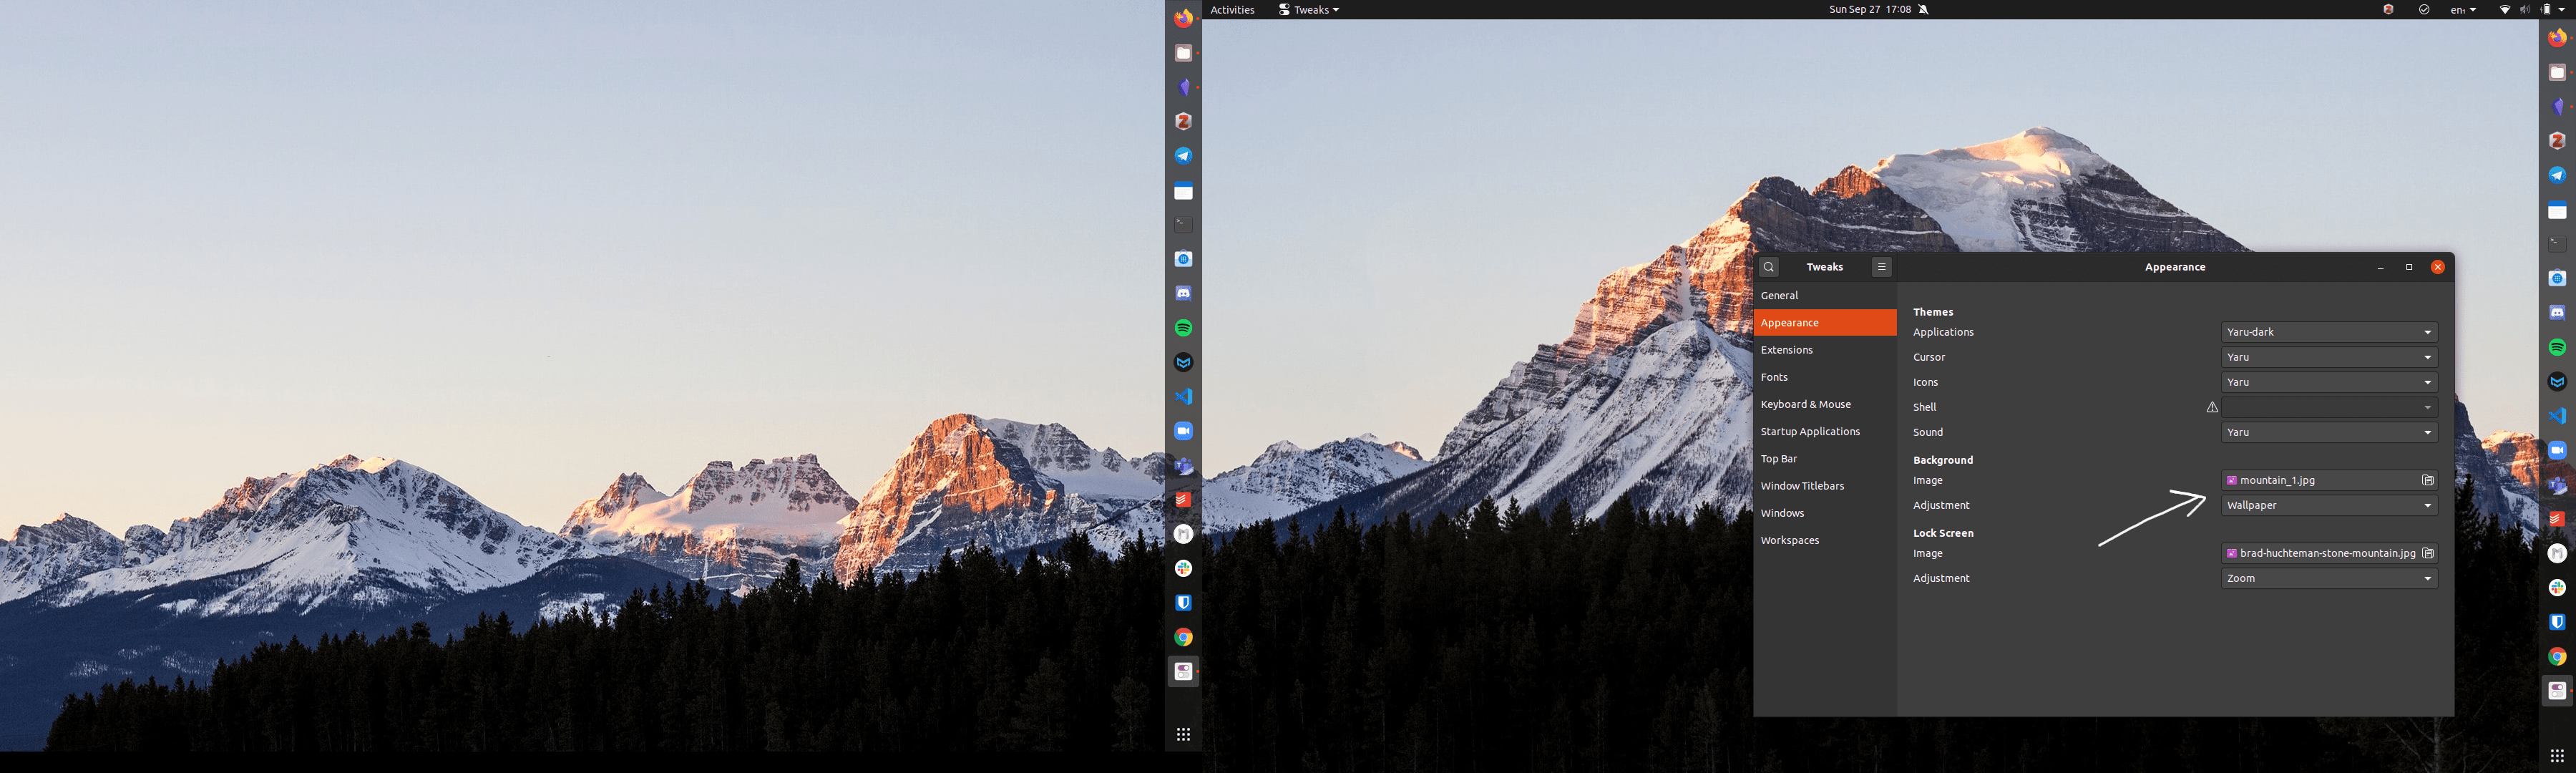 Dual-screen wallpaper on Ubuntu with Gnome Tweaks.